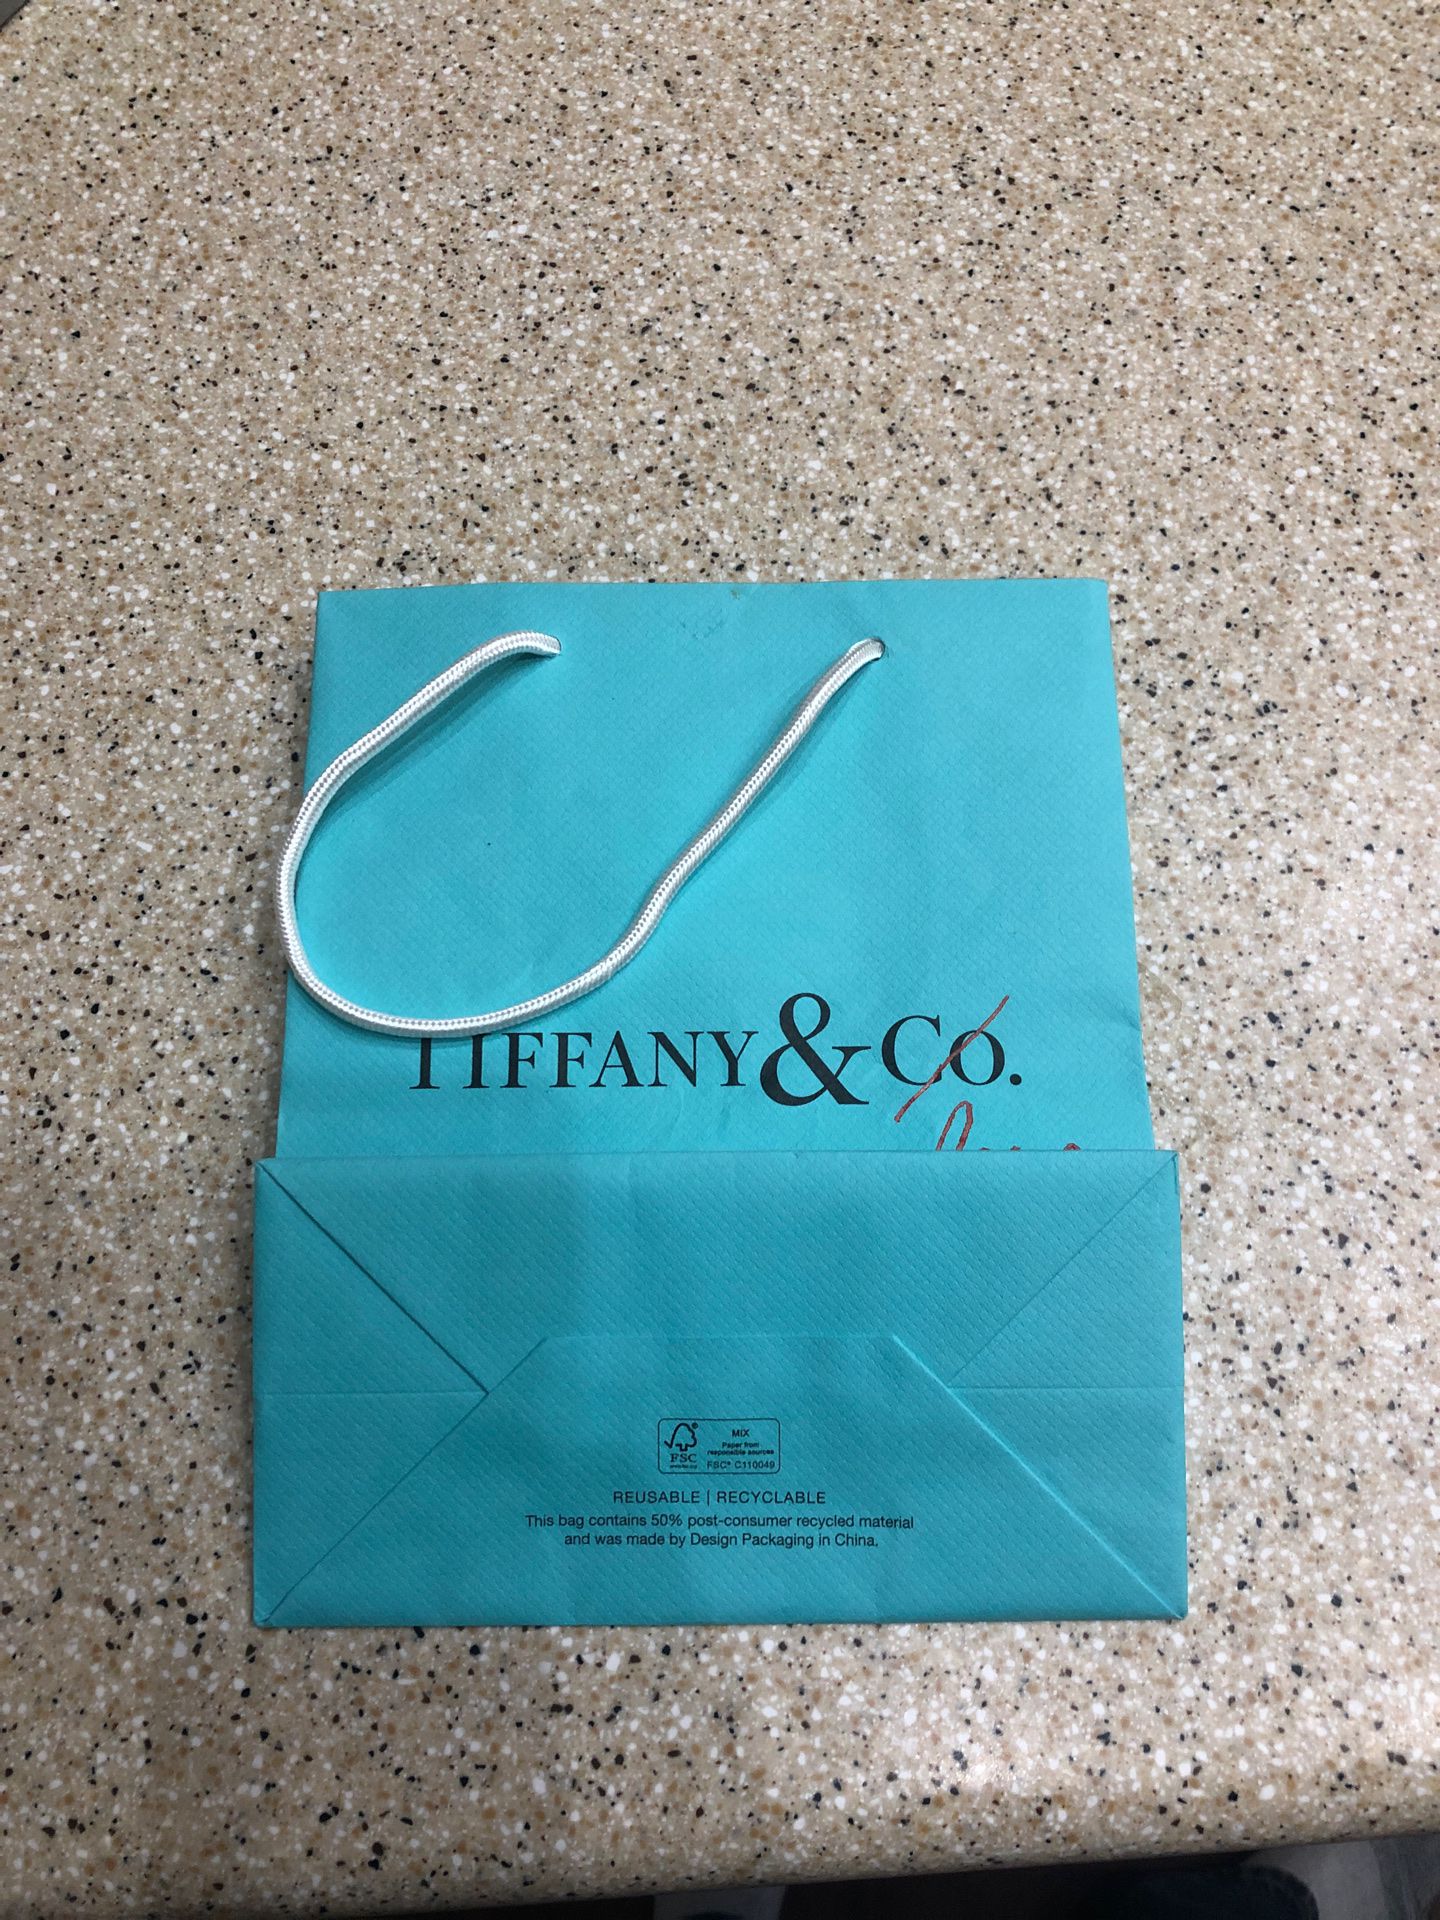 Tiffany & Co bag